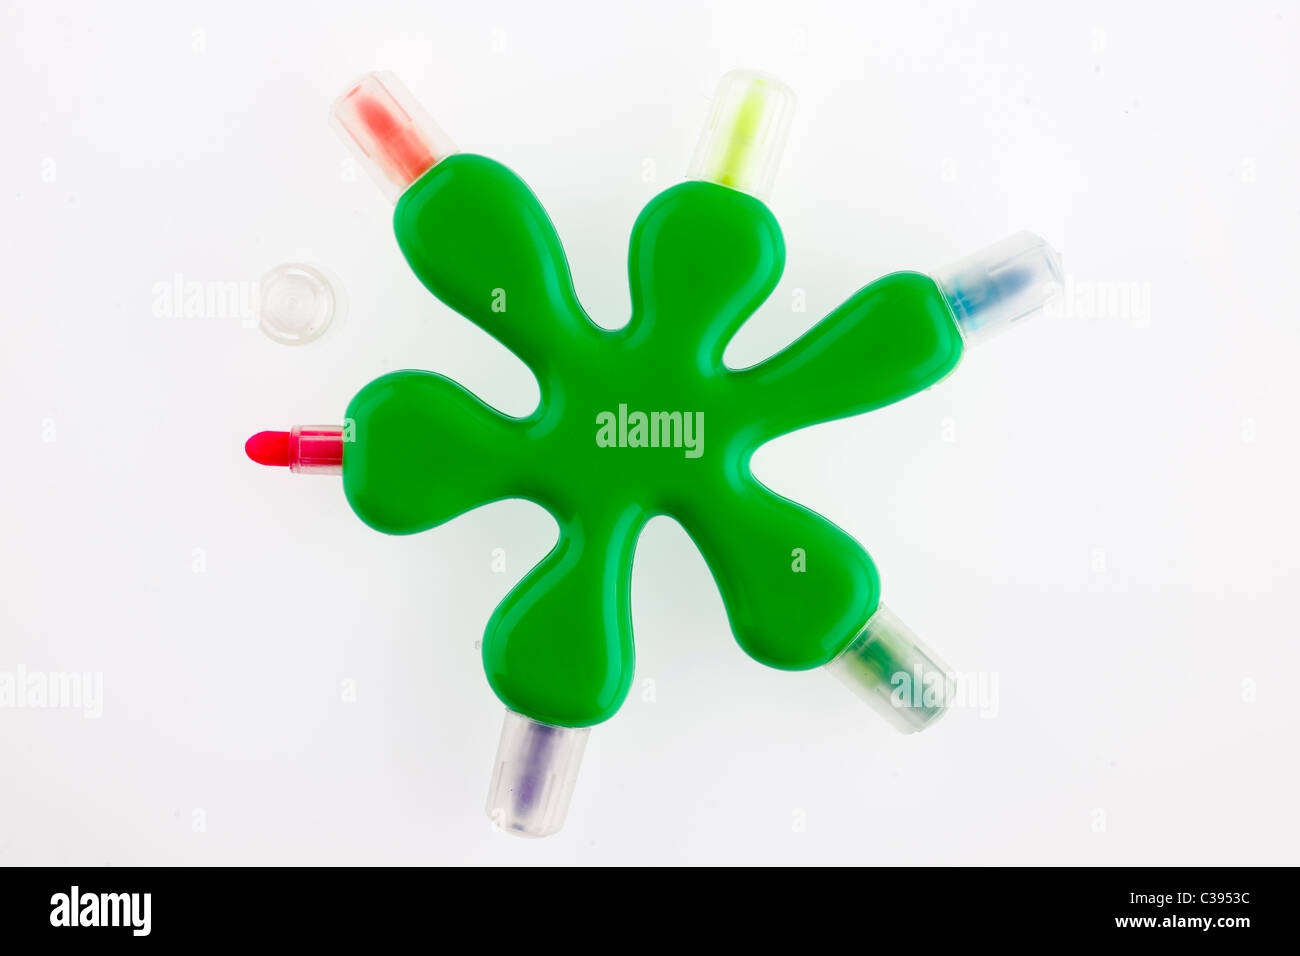 Unusual shaped green kiddies multicolored felt tip pens Stock Photo